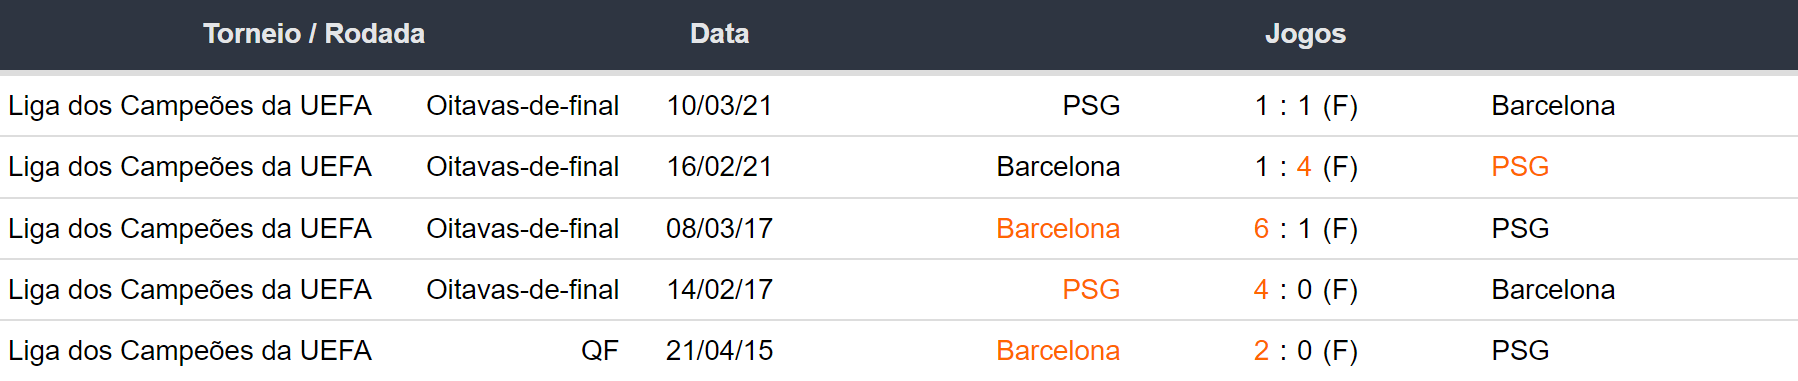 Ultimos 5 encontros PSG x Barcelona 100424